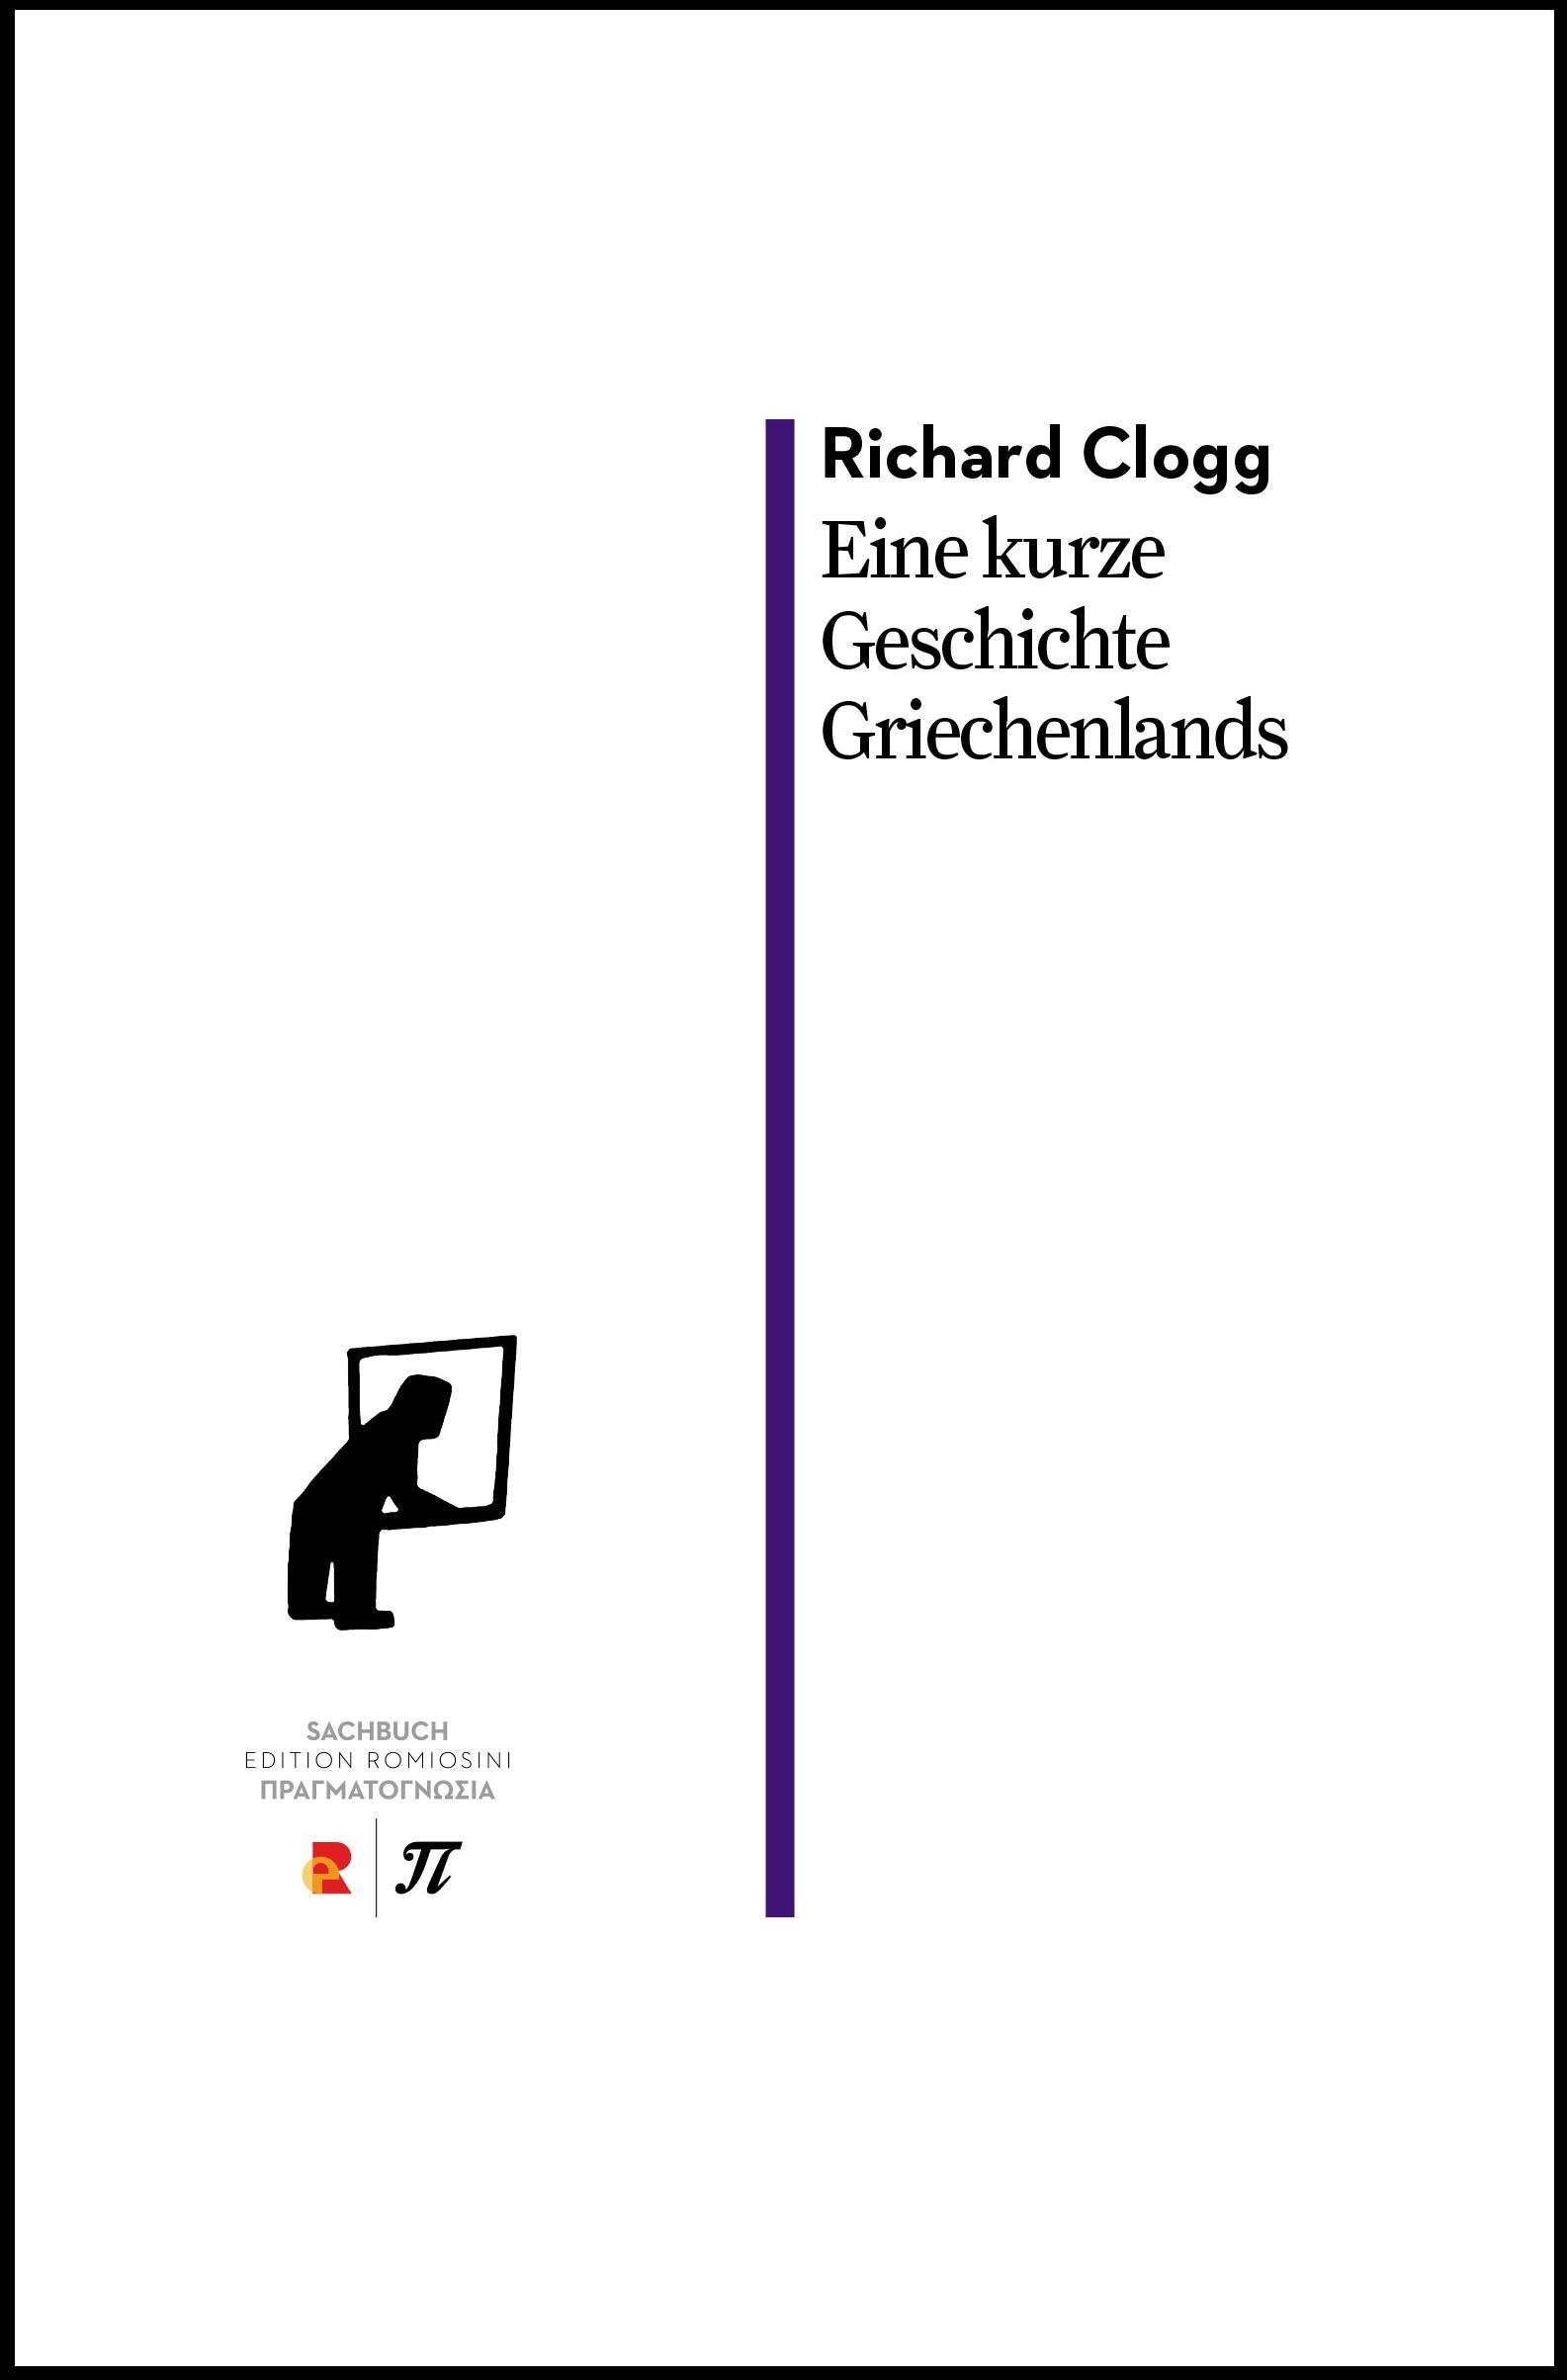 Richard Clogg, Eine kurze Geschichte Griechenlands